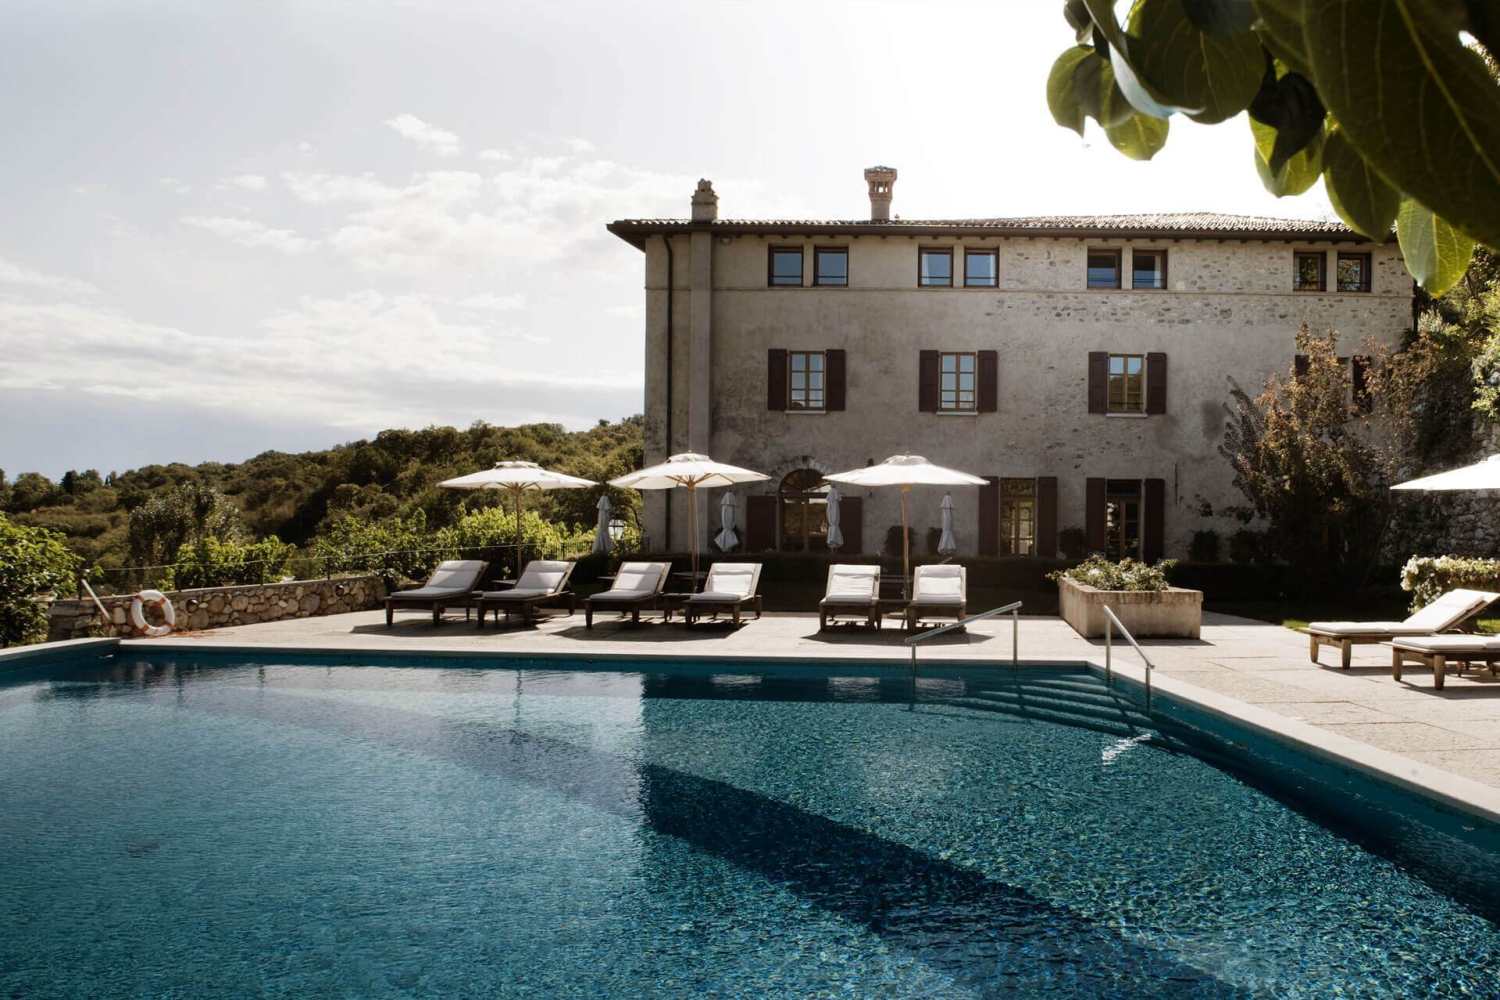 Villa Arcadio Hotel & Resort Salo, Lombardy - Italy